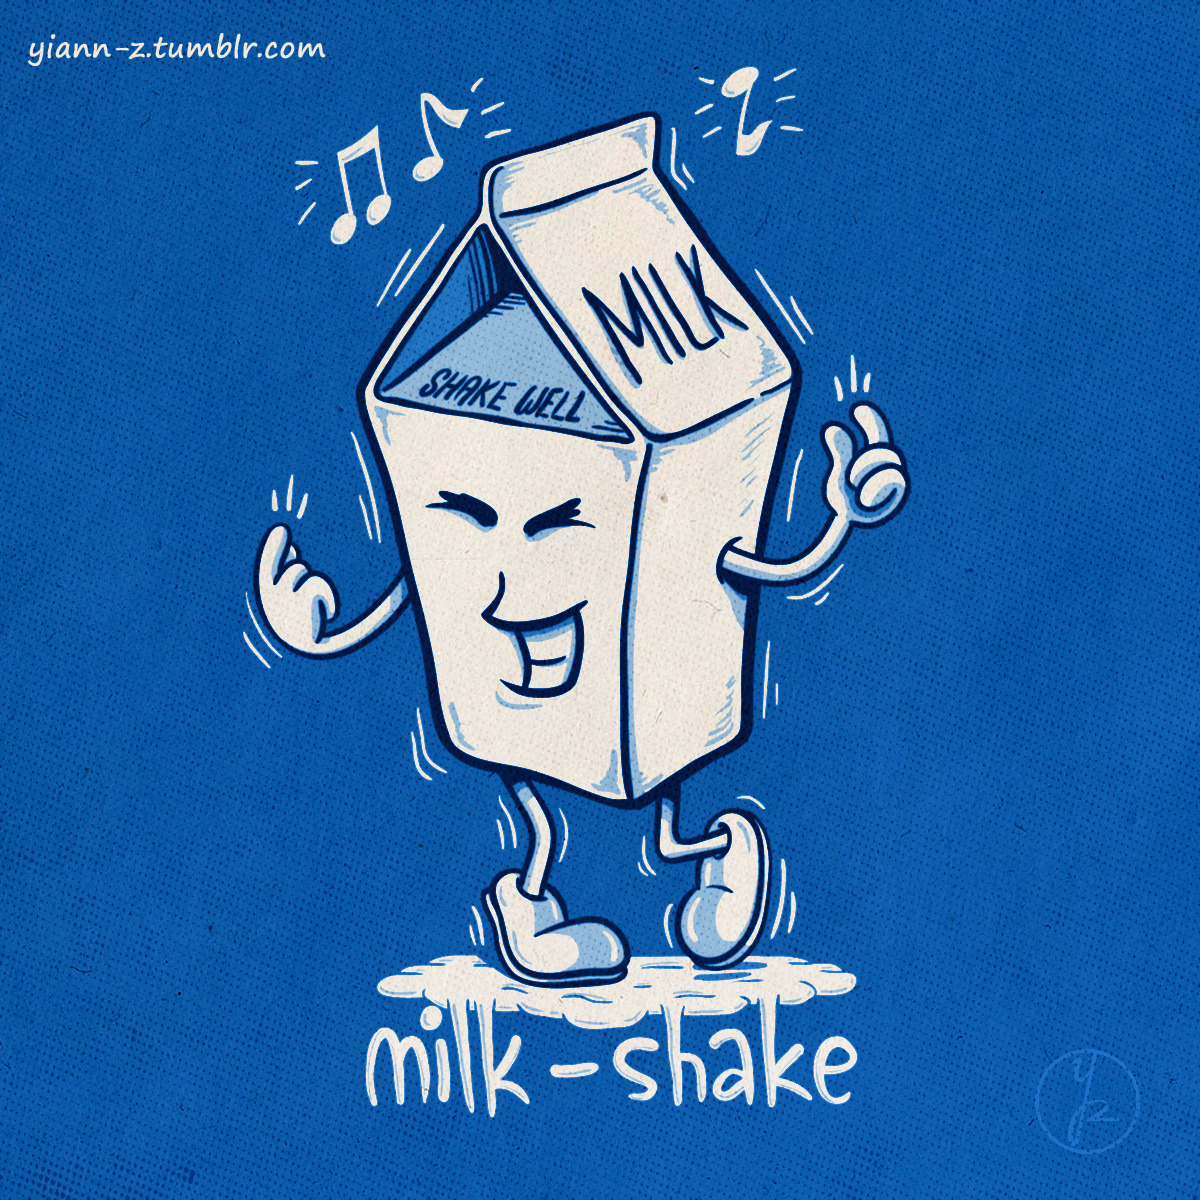 “Milkshake” by Yiannis Zervopoulos Tumblr I Flickr I Threadless I Twitter